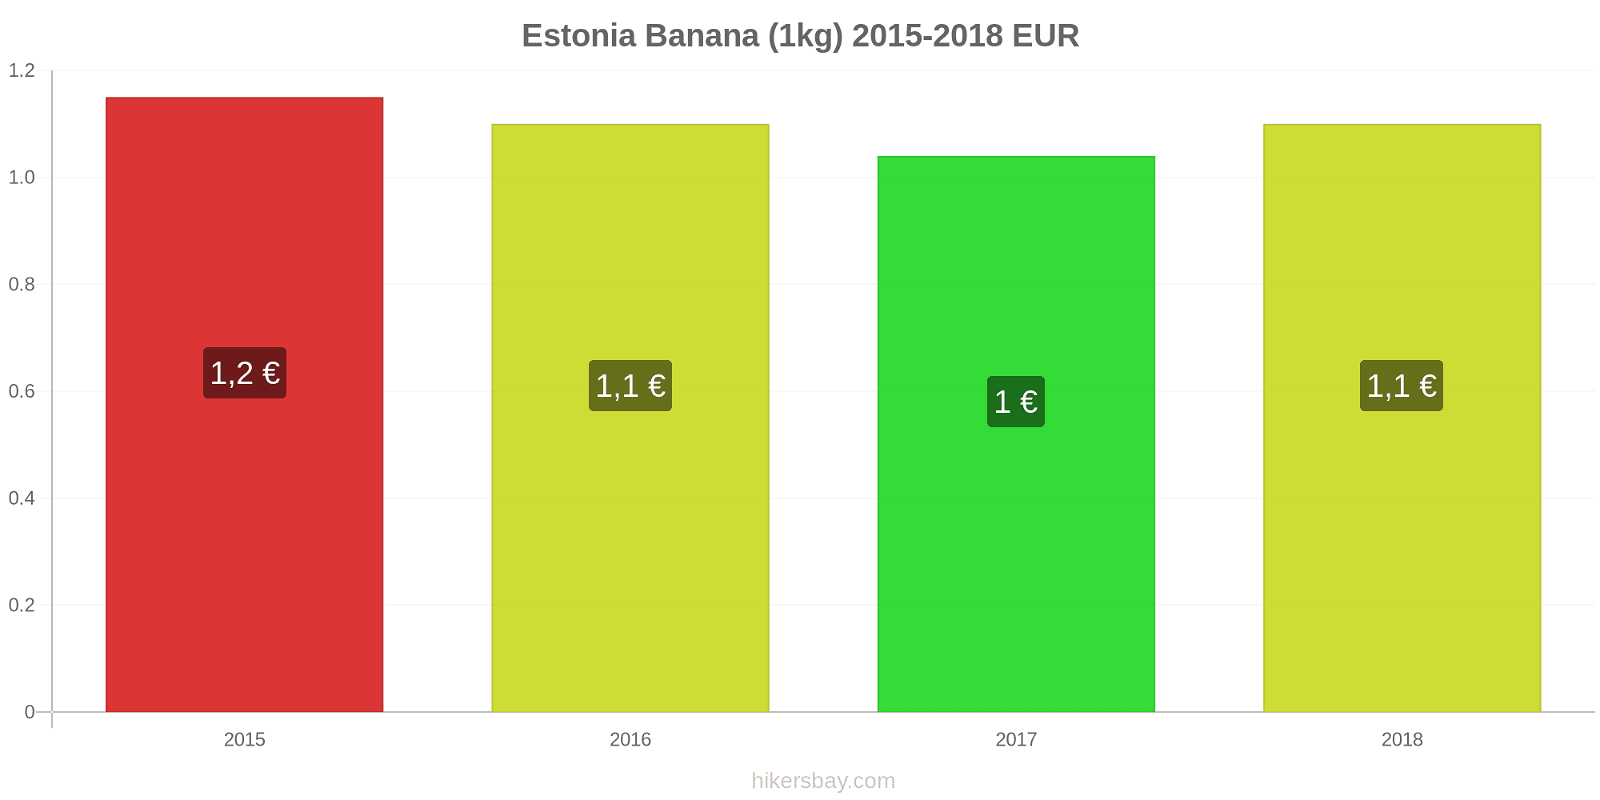 Estonia cambi di prezzo Banane (1kg) hikersbay.com